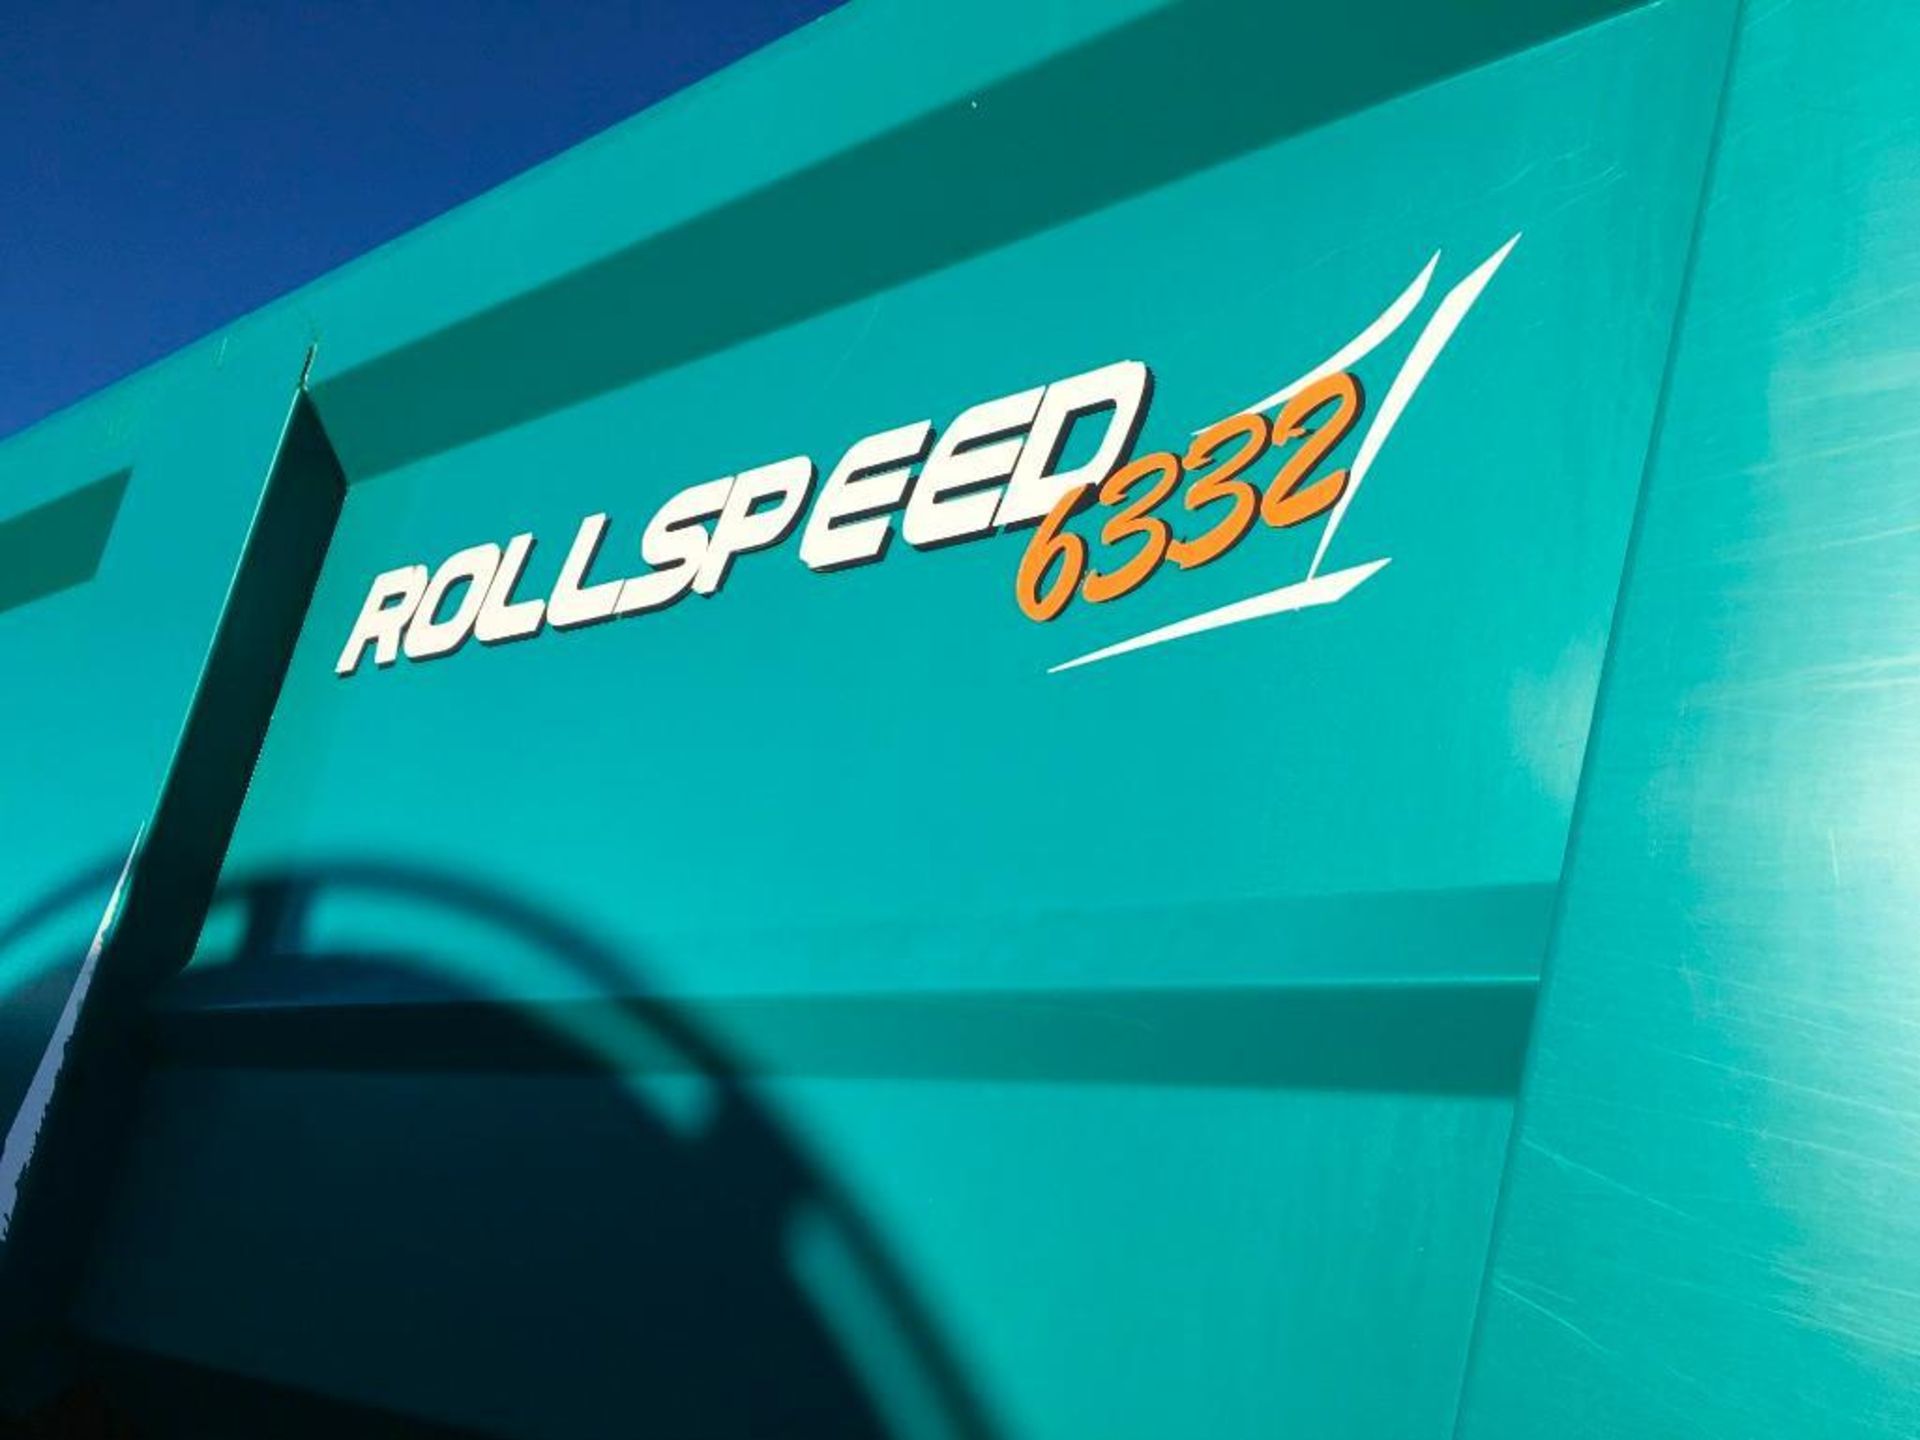 2011 Rolland 6332 Rollspeed twin axle trailer, commercial axles, hydraulic rear door, hydraulic draw - Image 10 of 12